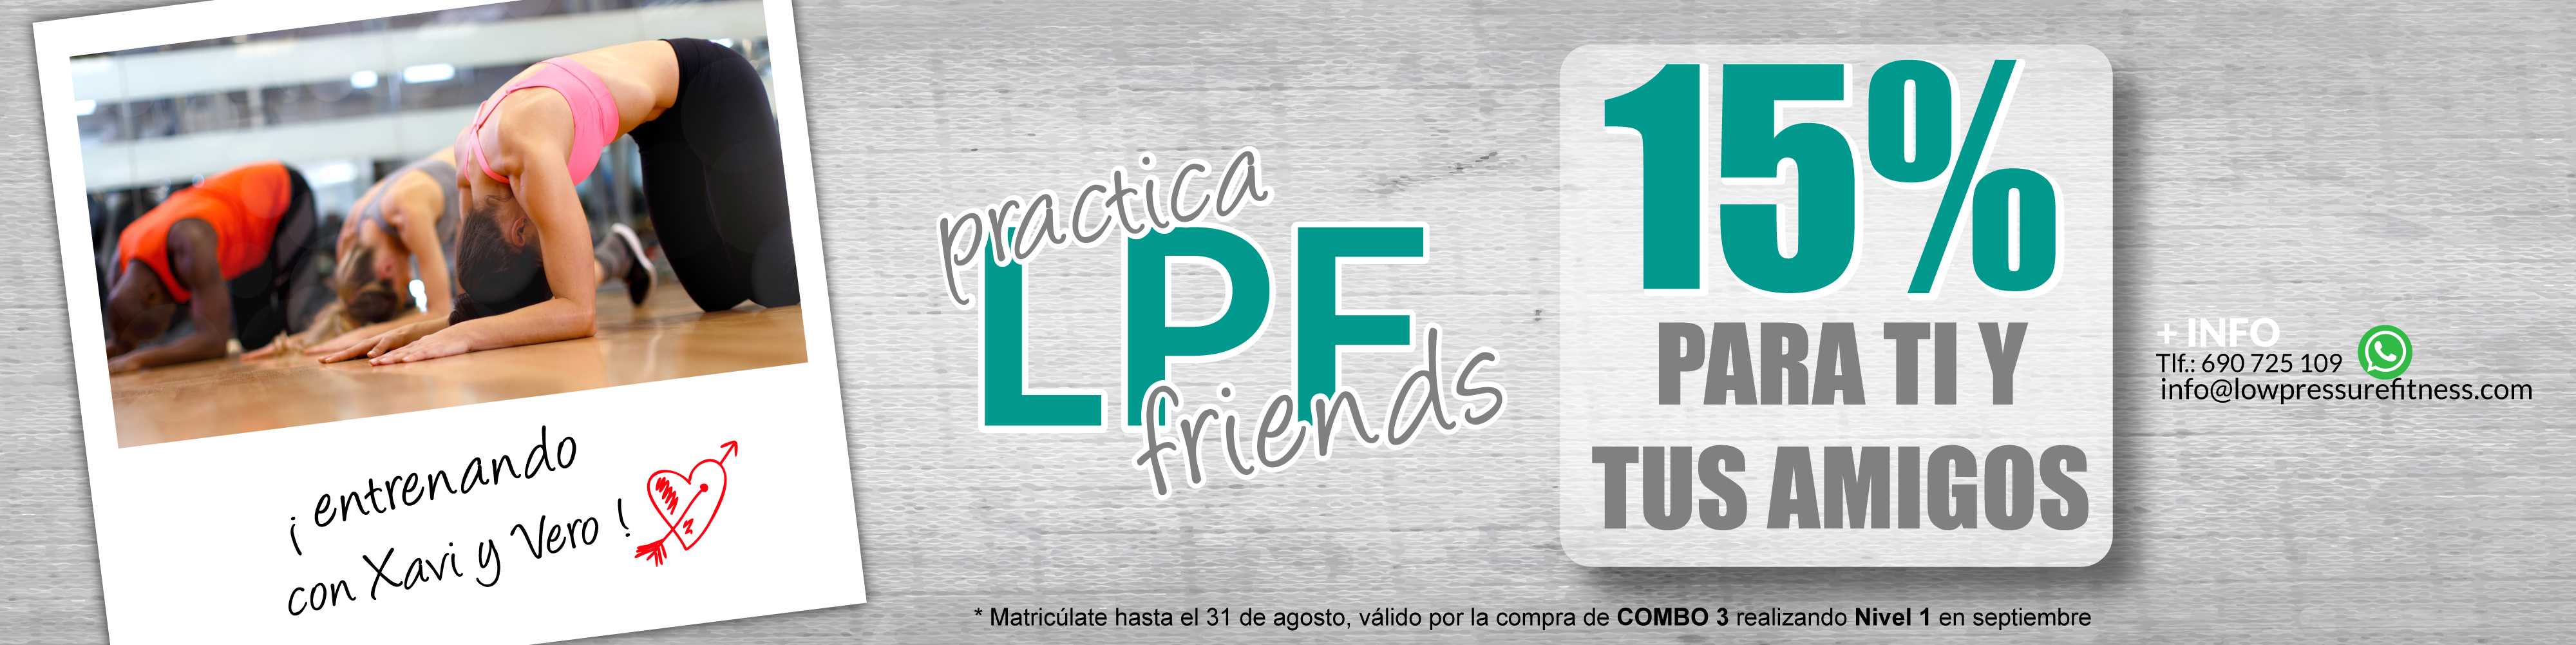 campaña-LPF-friends